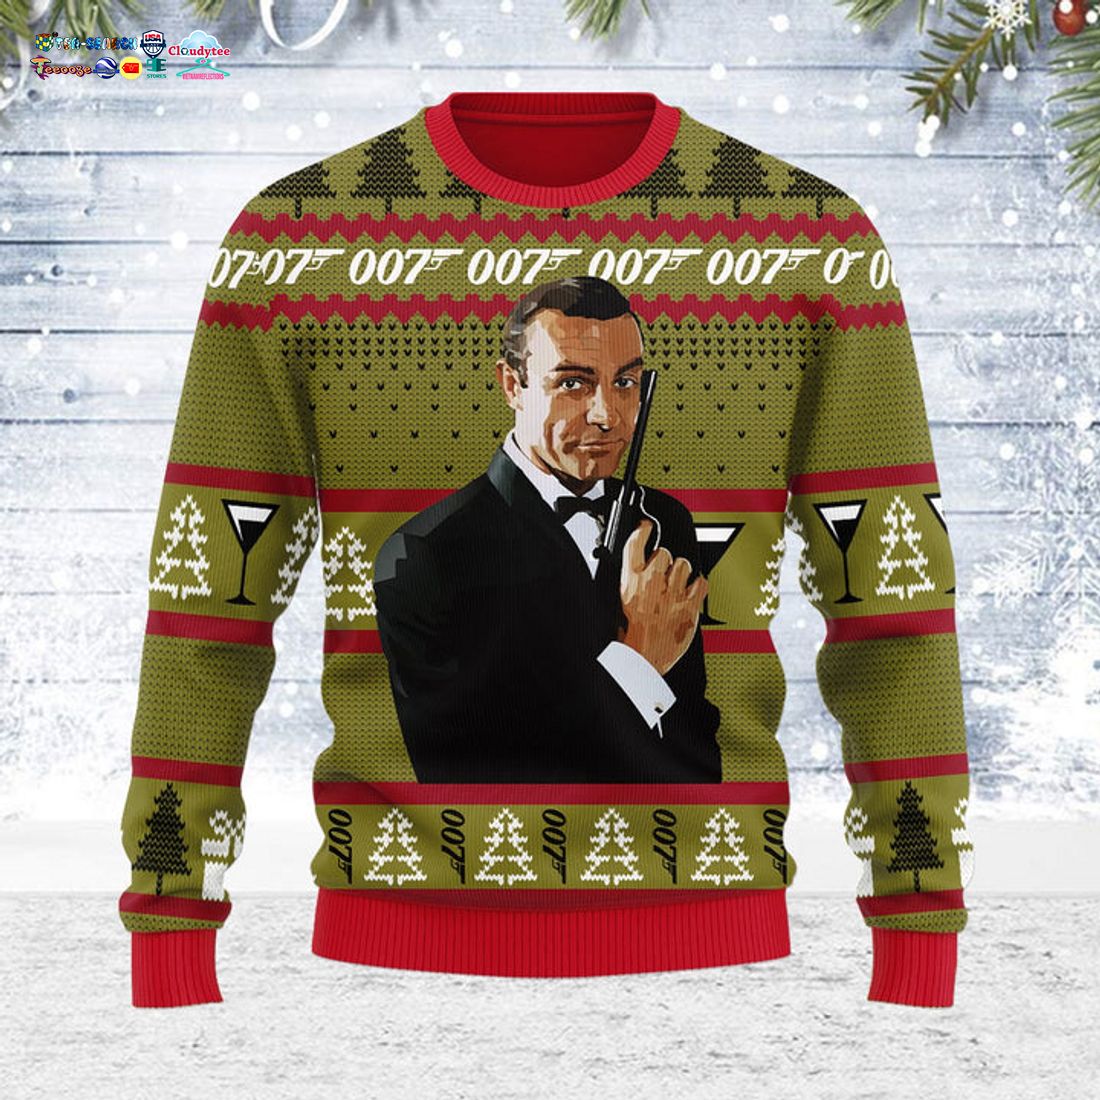 james-bond-007-ugly-christmas-sweater-1-3qllz.jpg